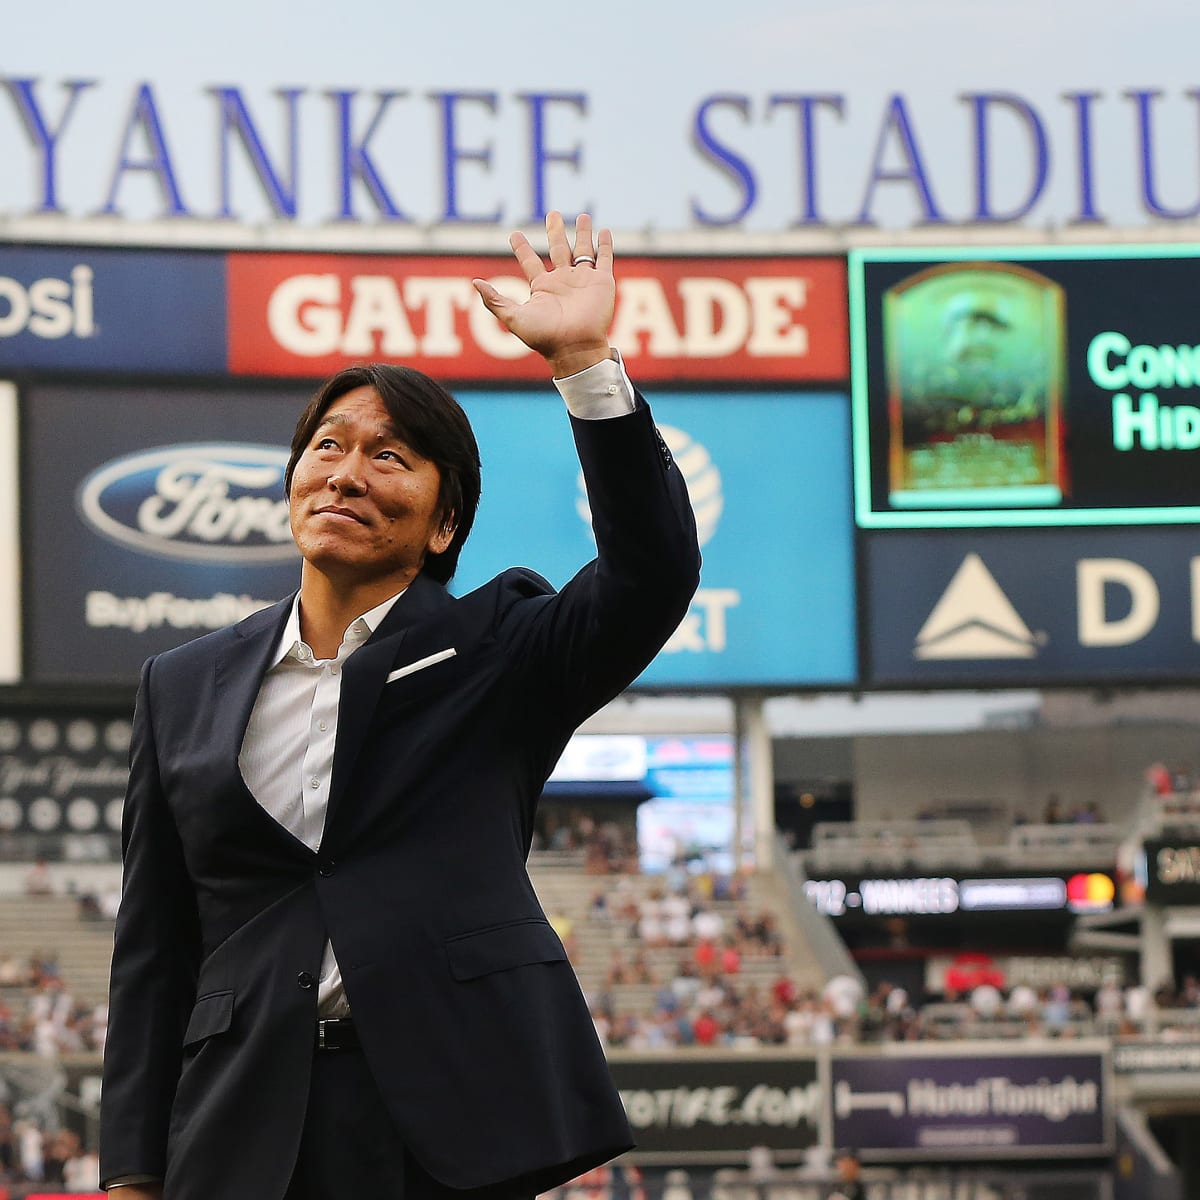 Yankees Hideki Matsui: Grand slam at Yankee Stadium for first